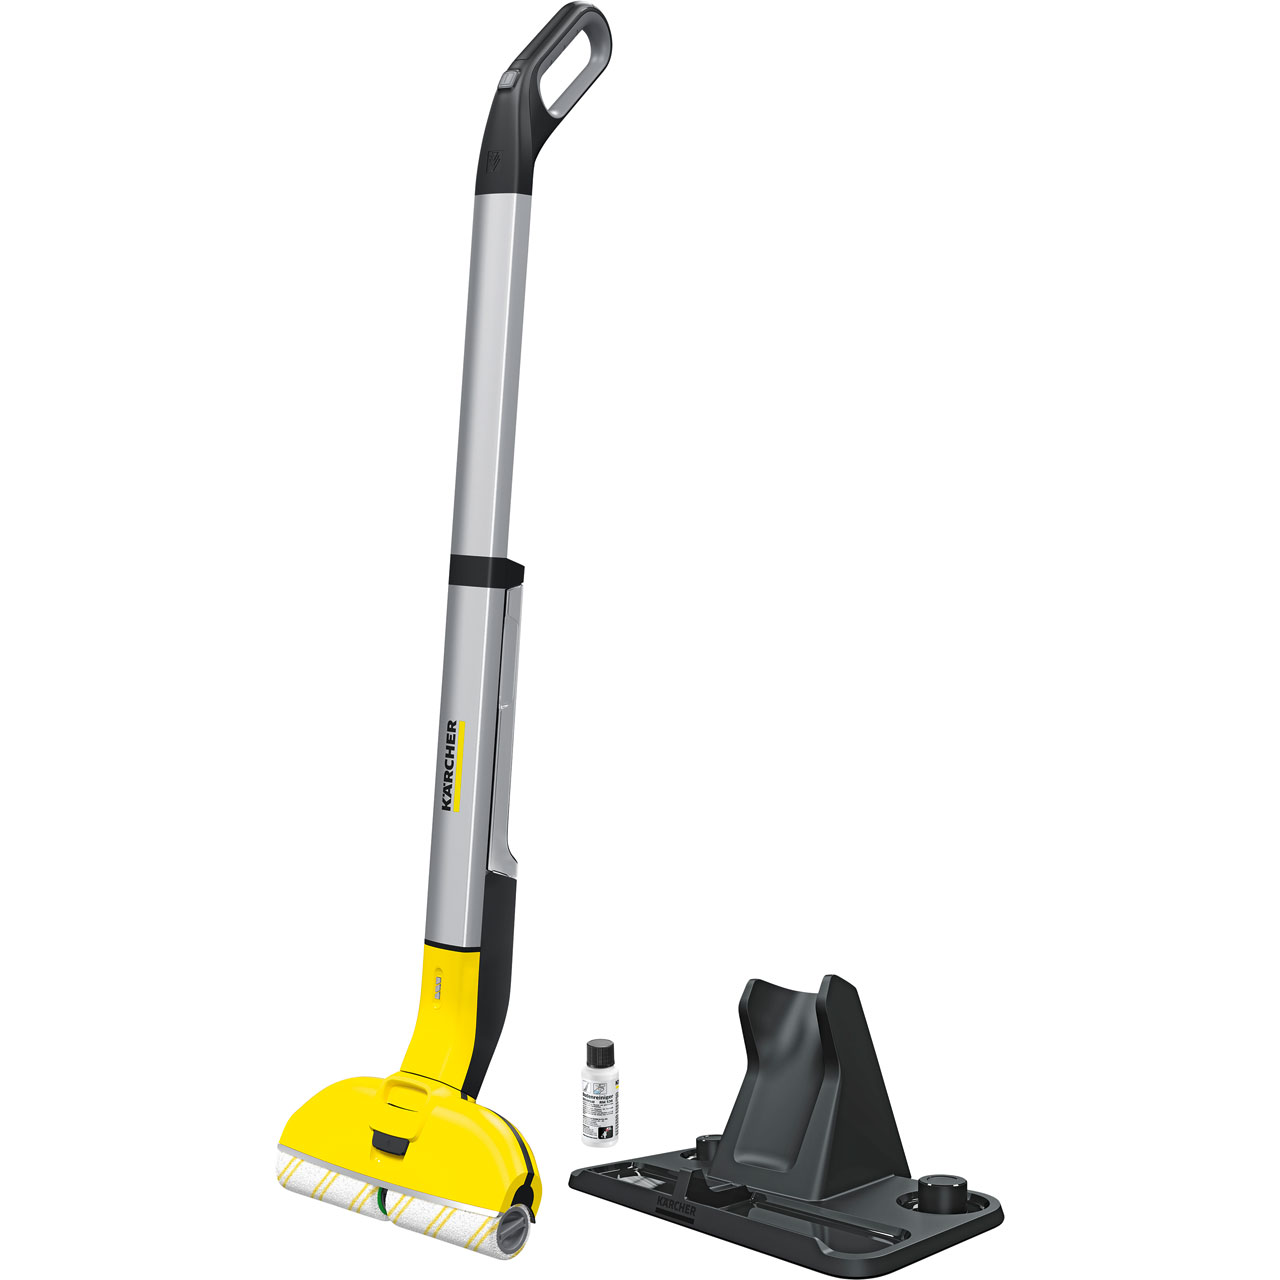 Karcher FC3 Cordless Hard Floor Cleaner Review